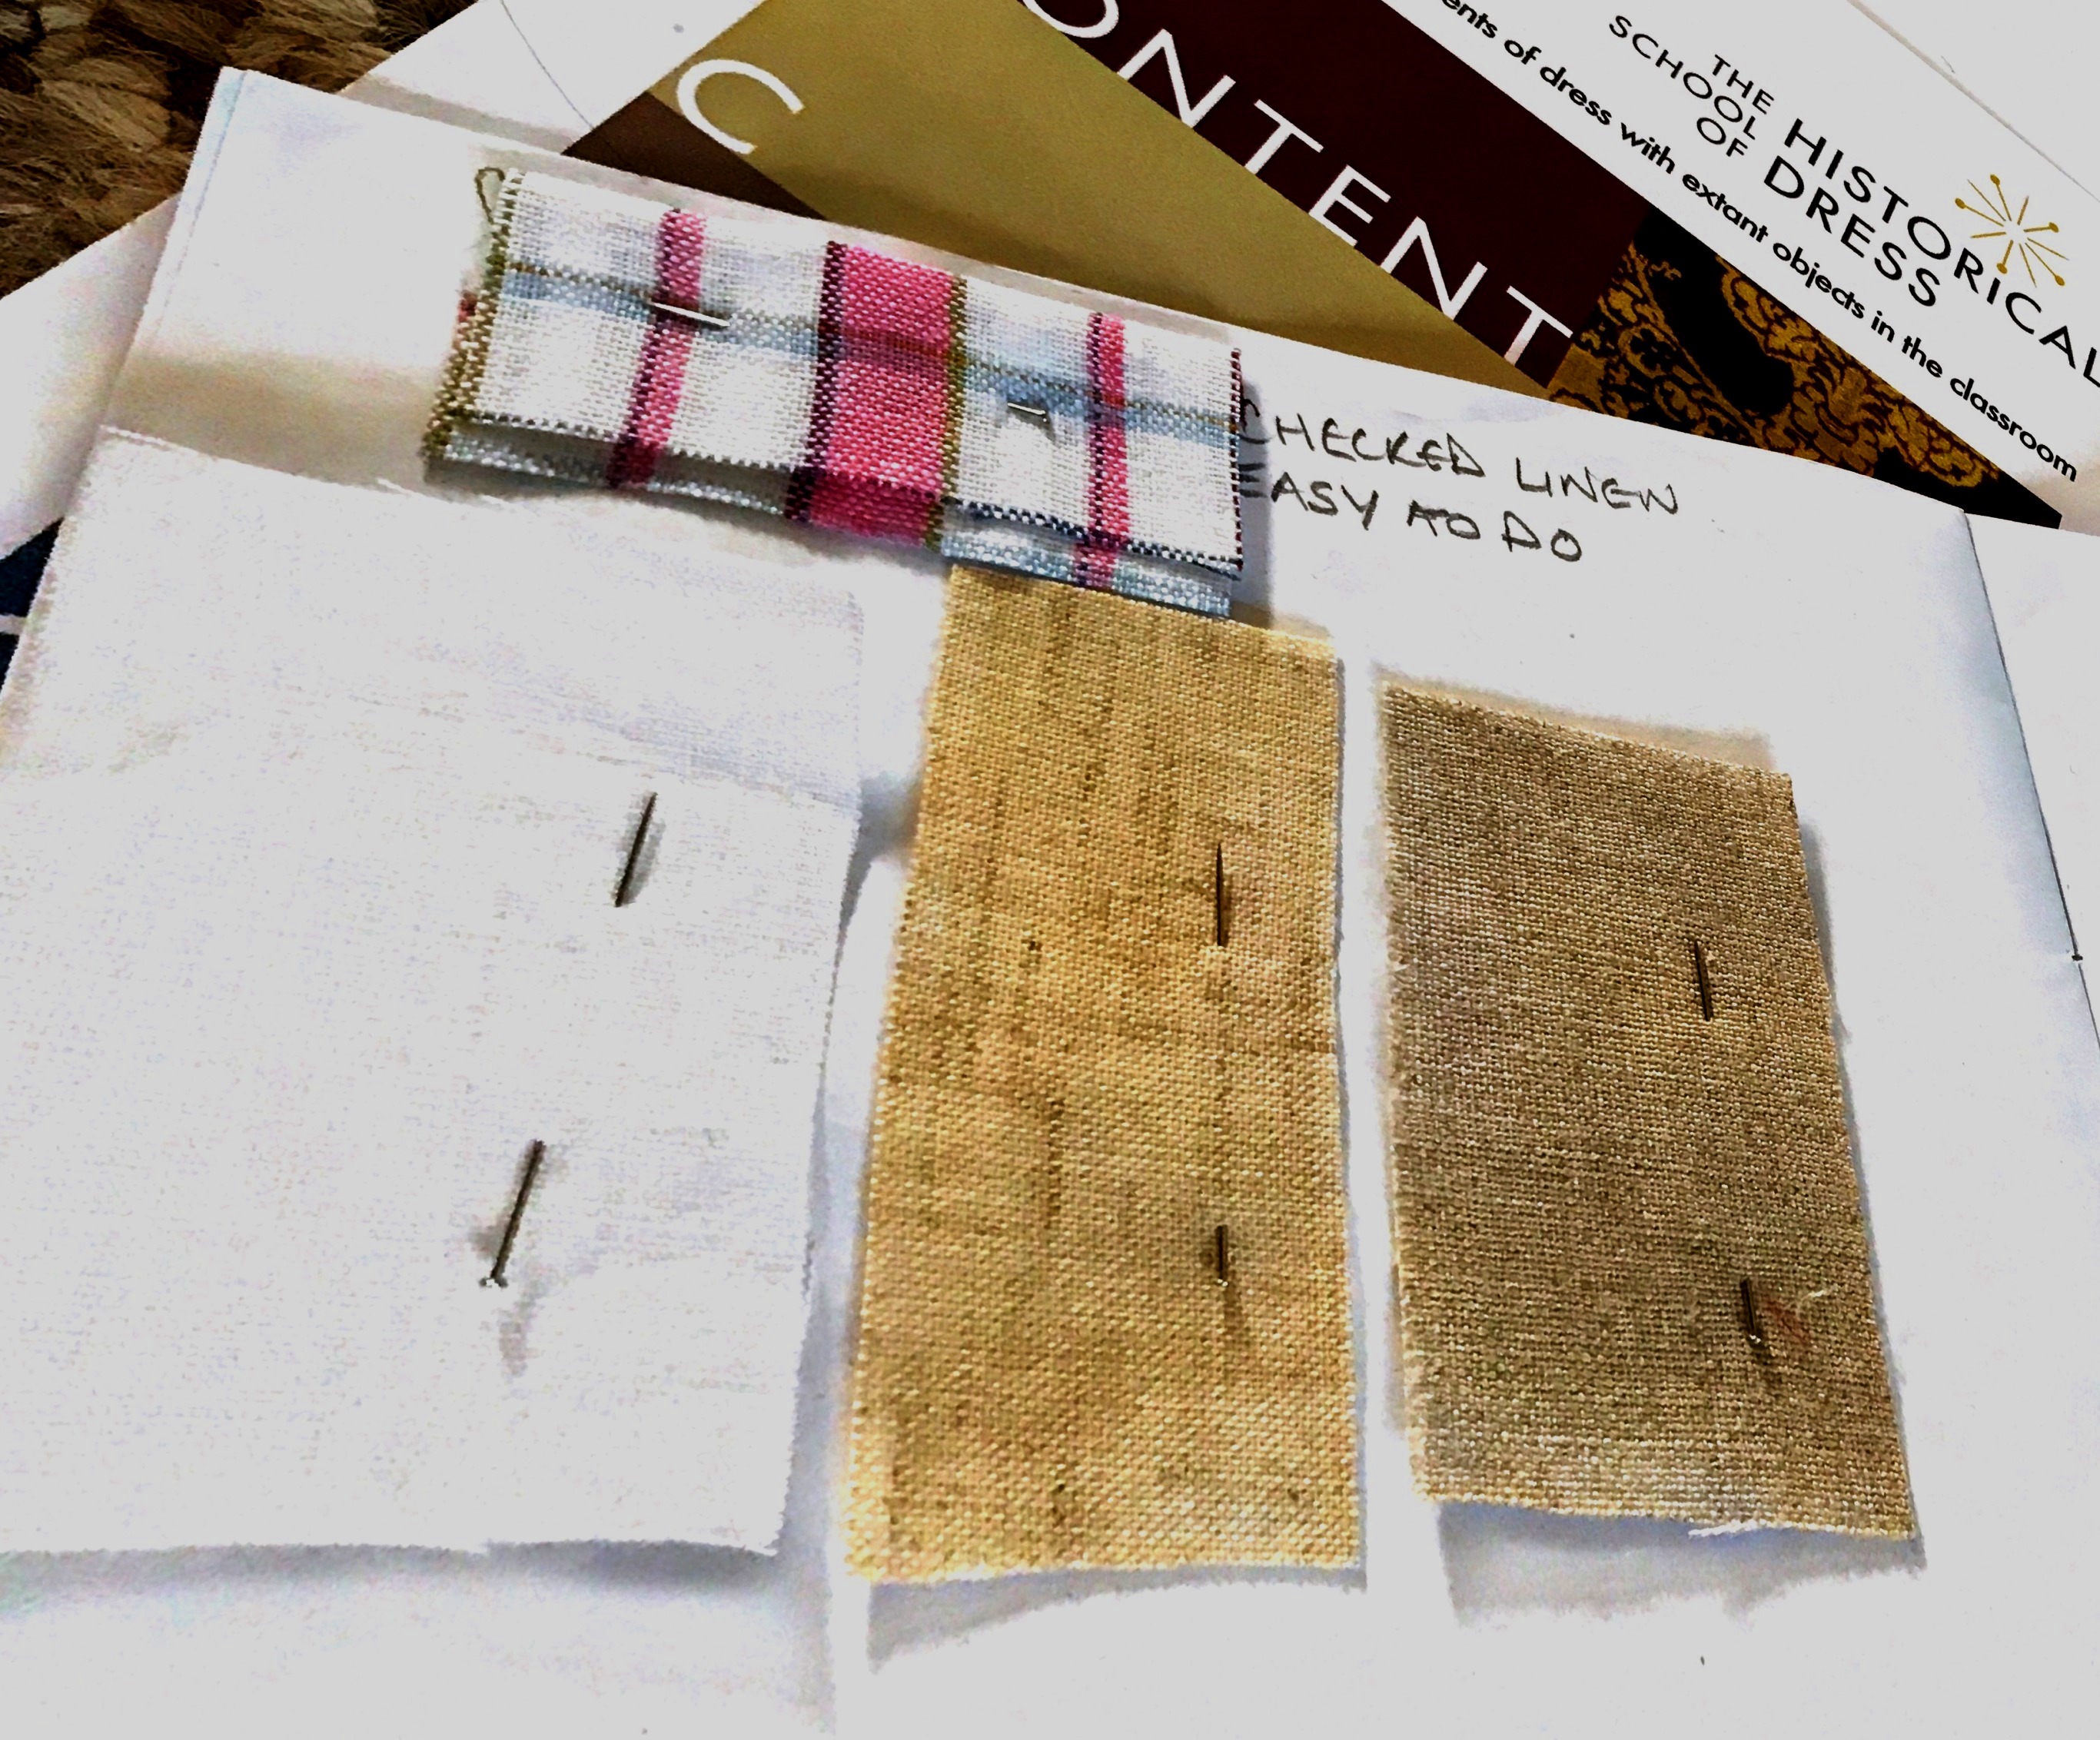 Catriona McIntosh's fabric samples